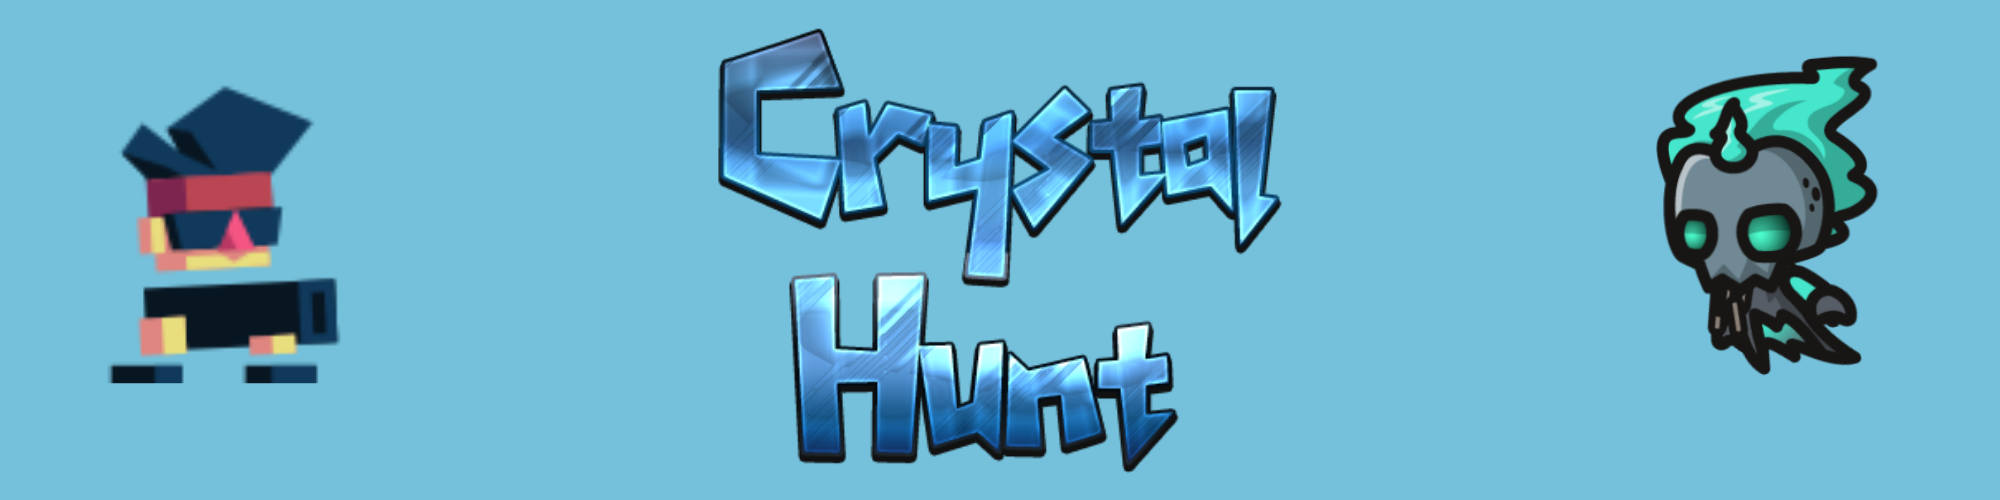 Crystal Hunt